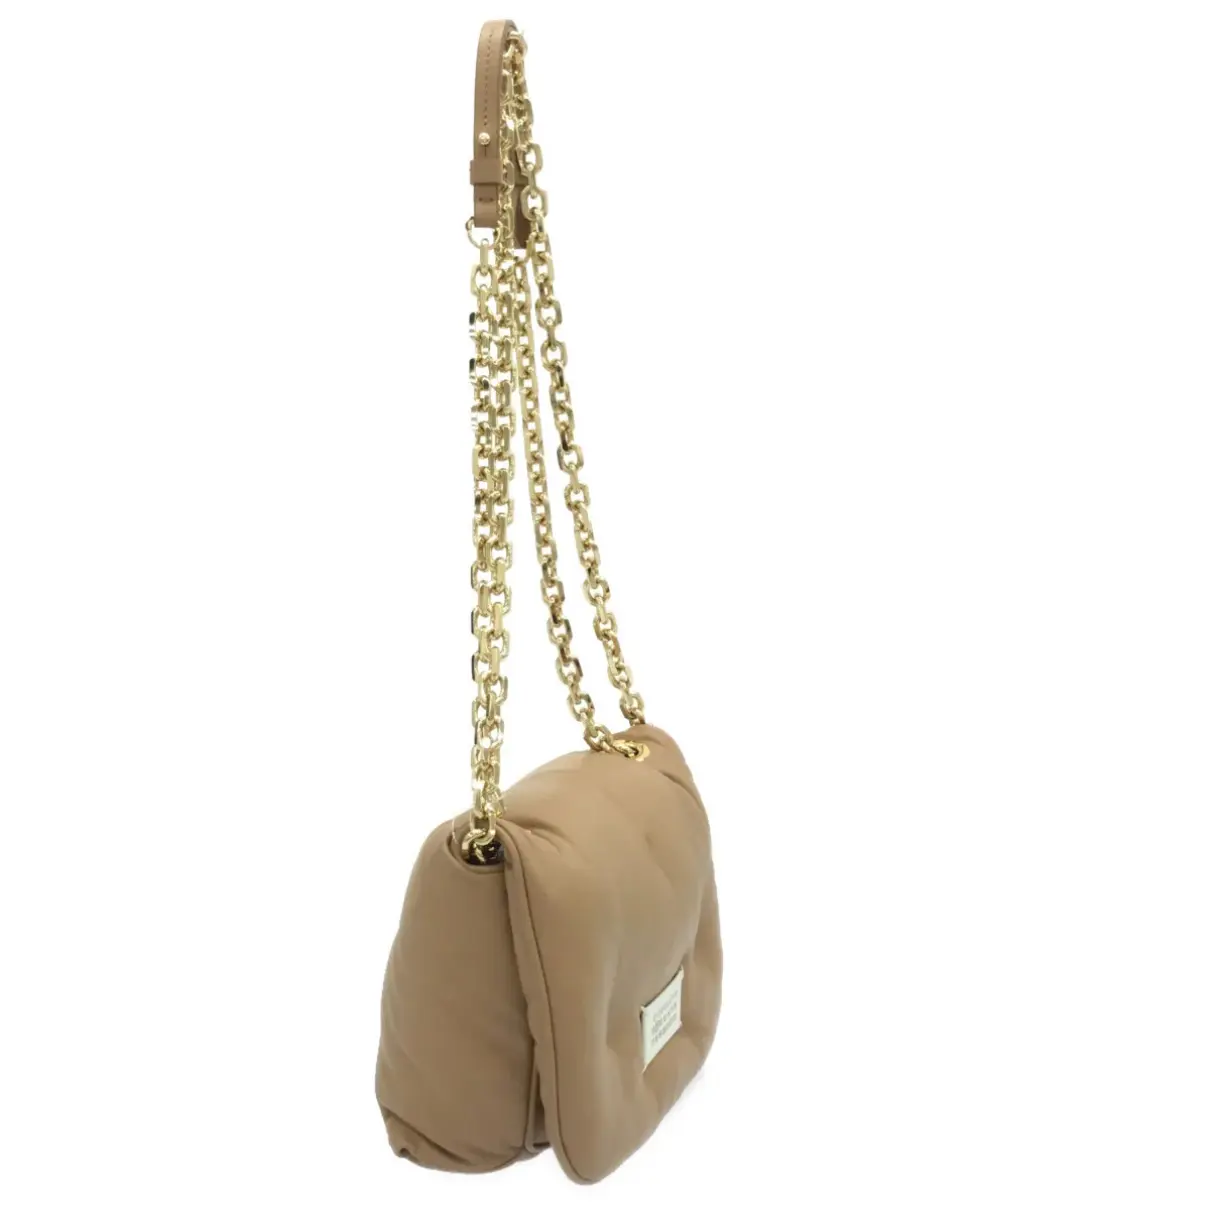 Buy Maison Martin Margiela Glam Slam leather handbag online